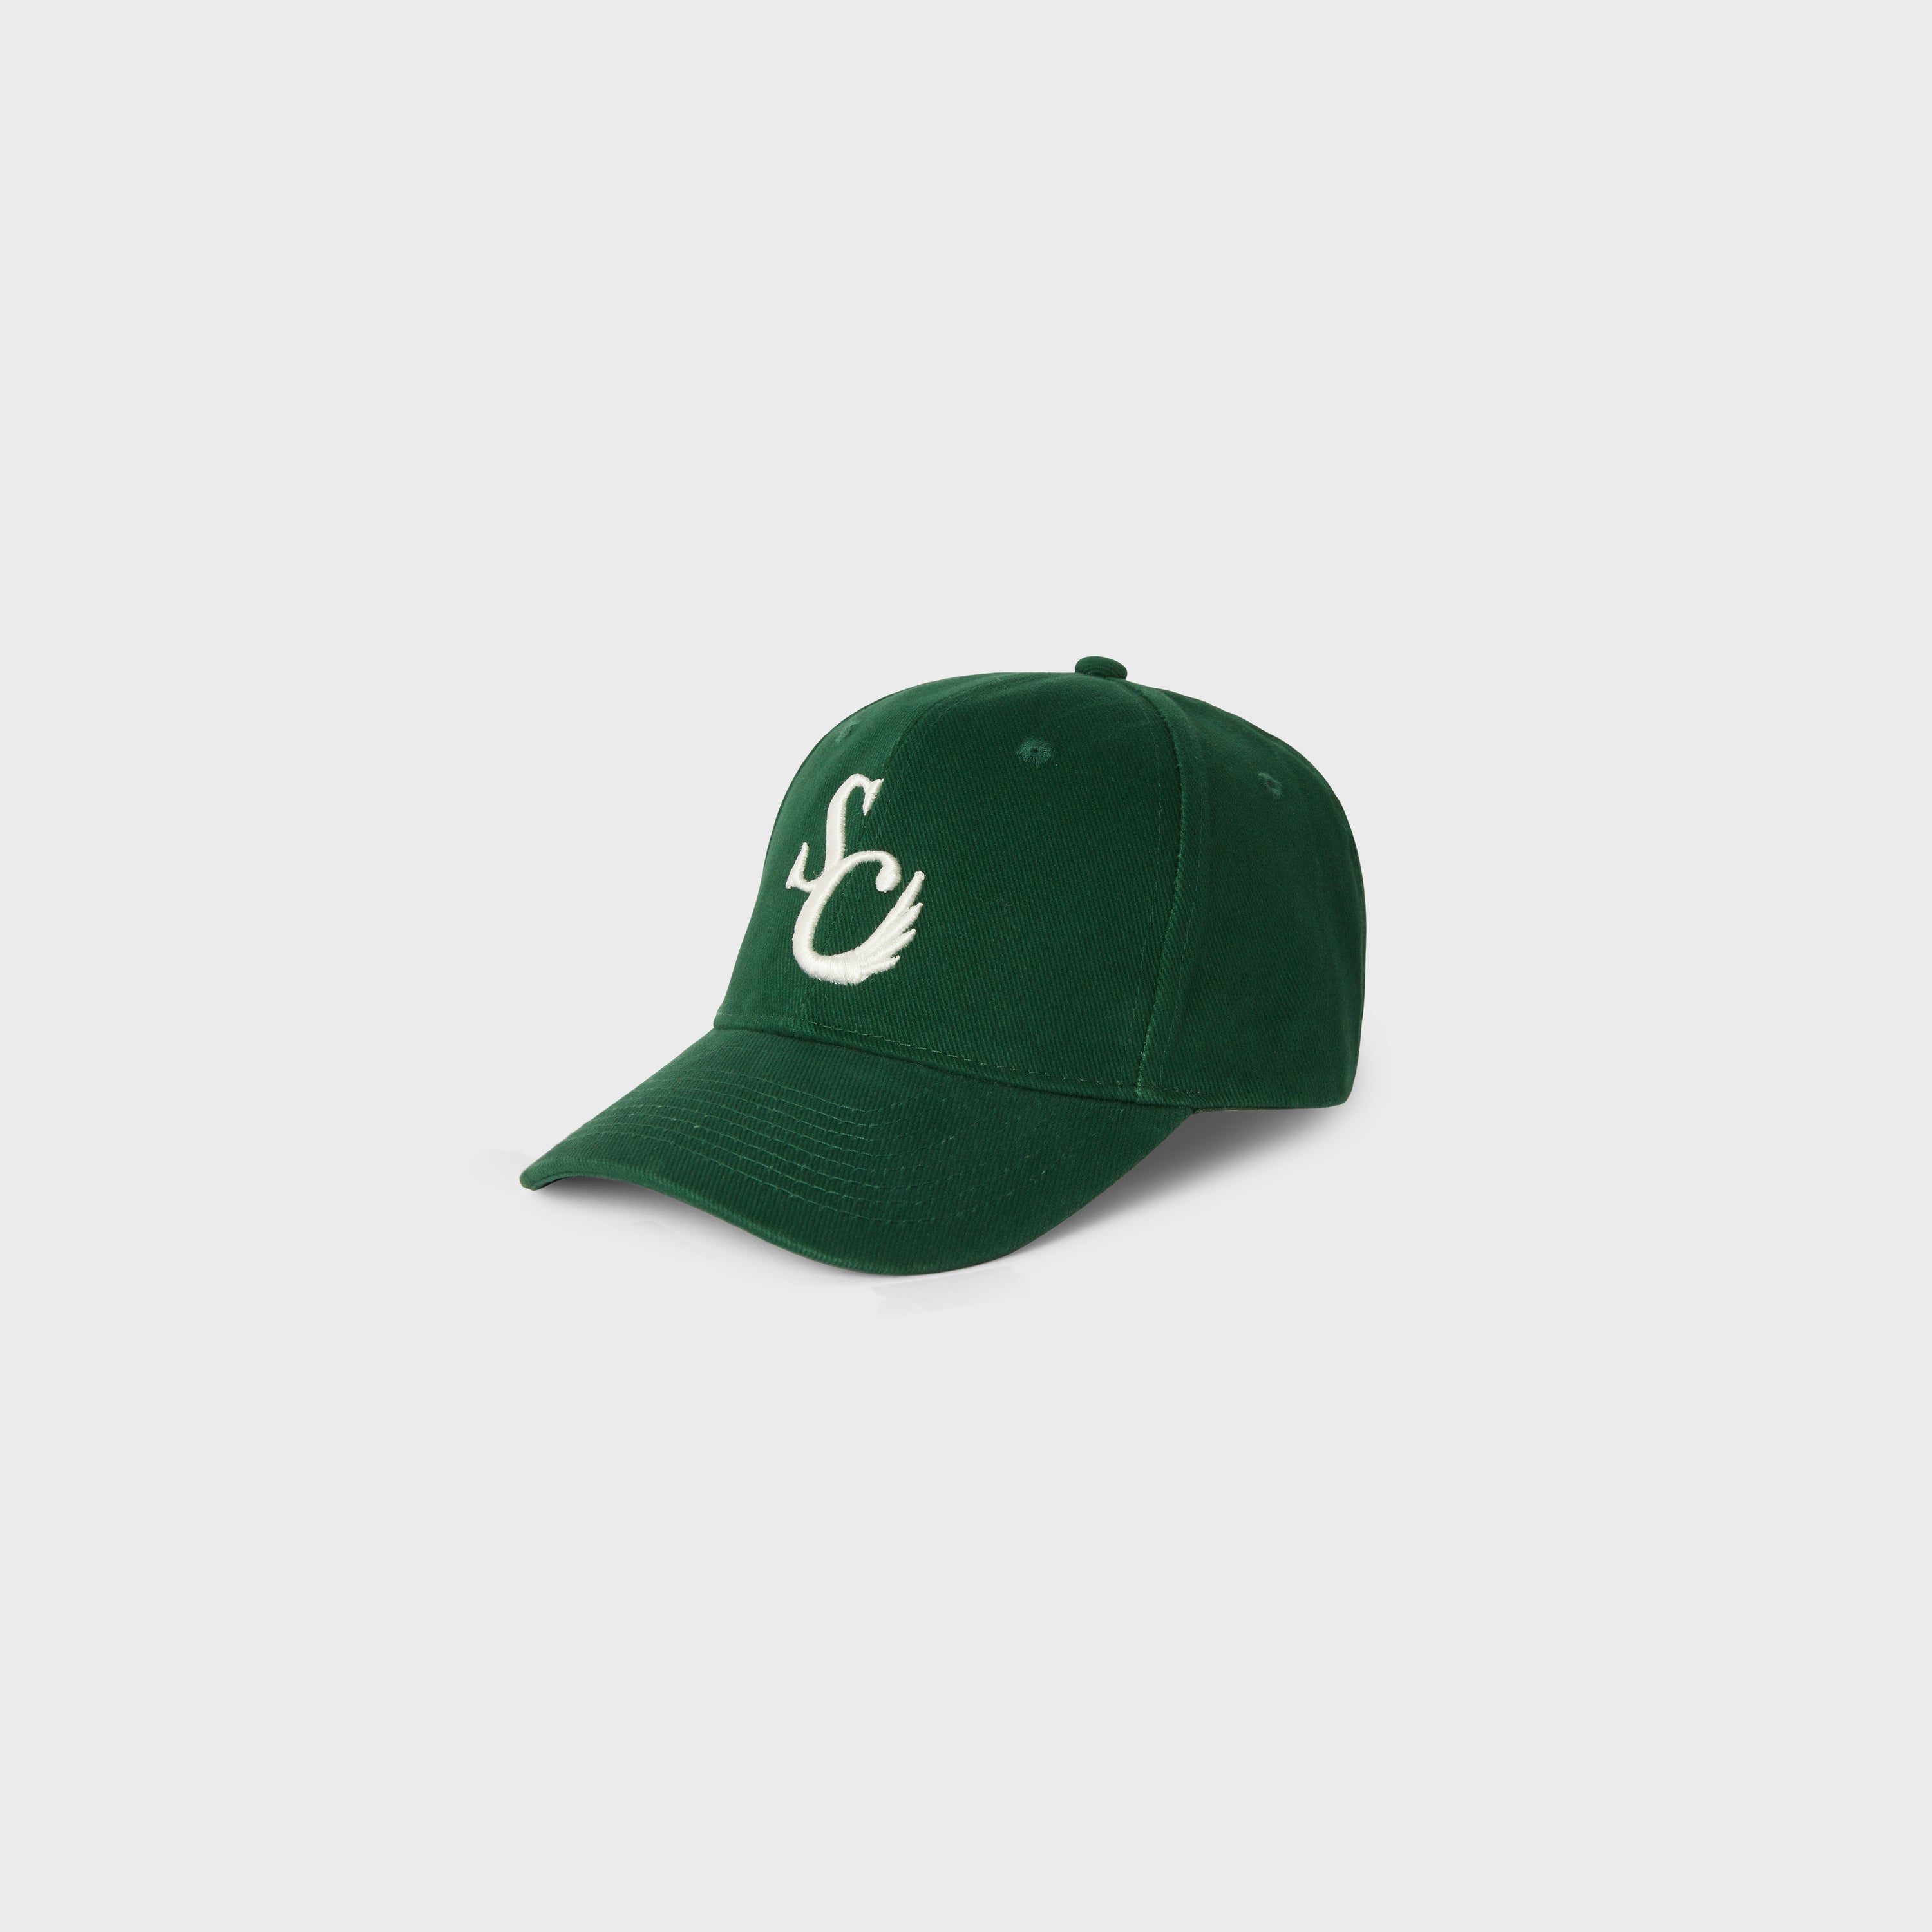 Wing Logo Baseball Cap in Green Cotton